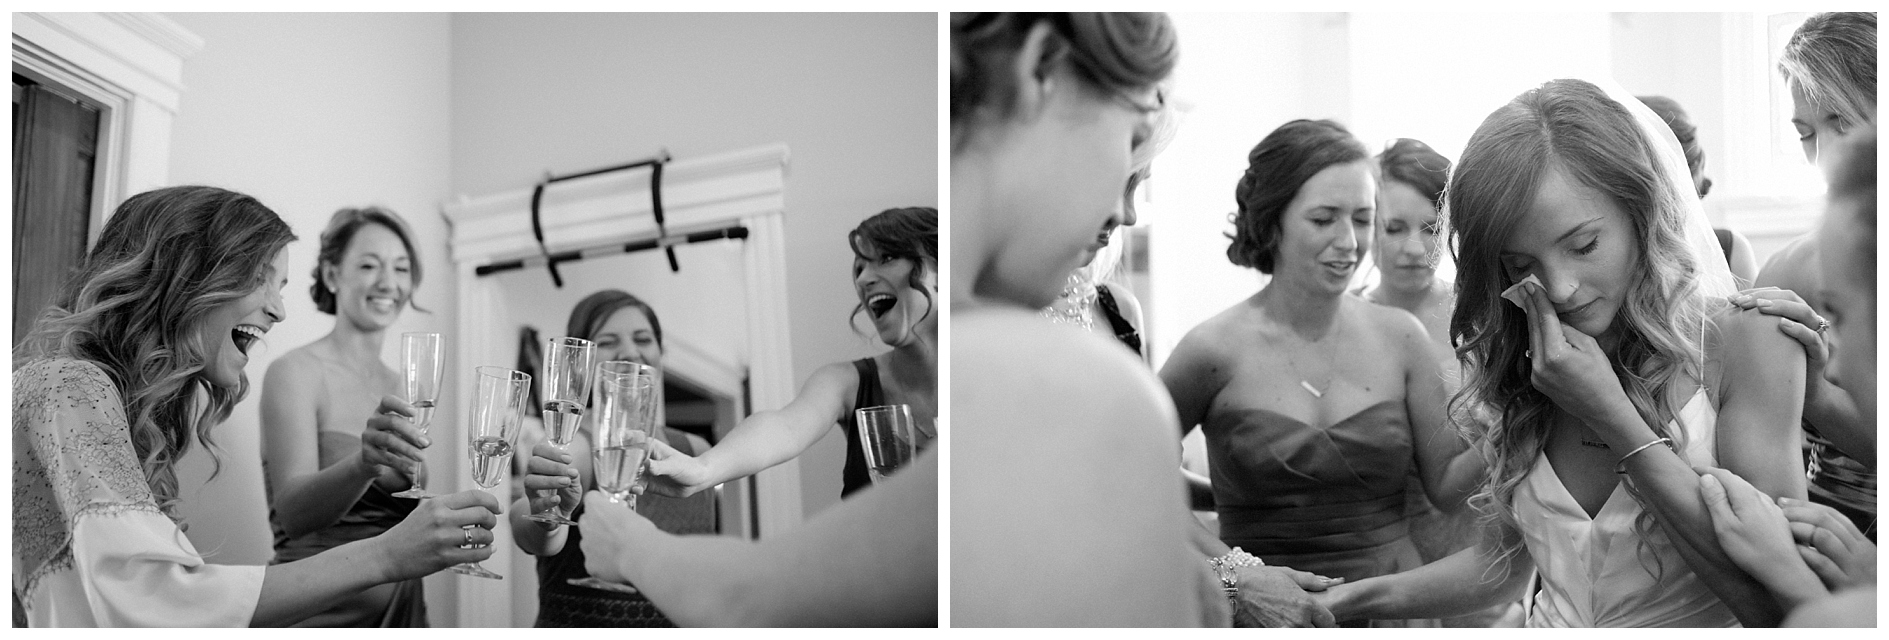 Bloom&Lo_AtlantaPhotographer_AmeliaTatnall_2015_Wedding_Georgia_Atlanta_AmbientStudio_Sara&Jared_Blog_Portfolio__0016.jpg